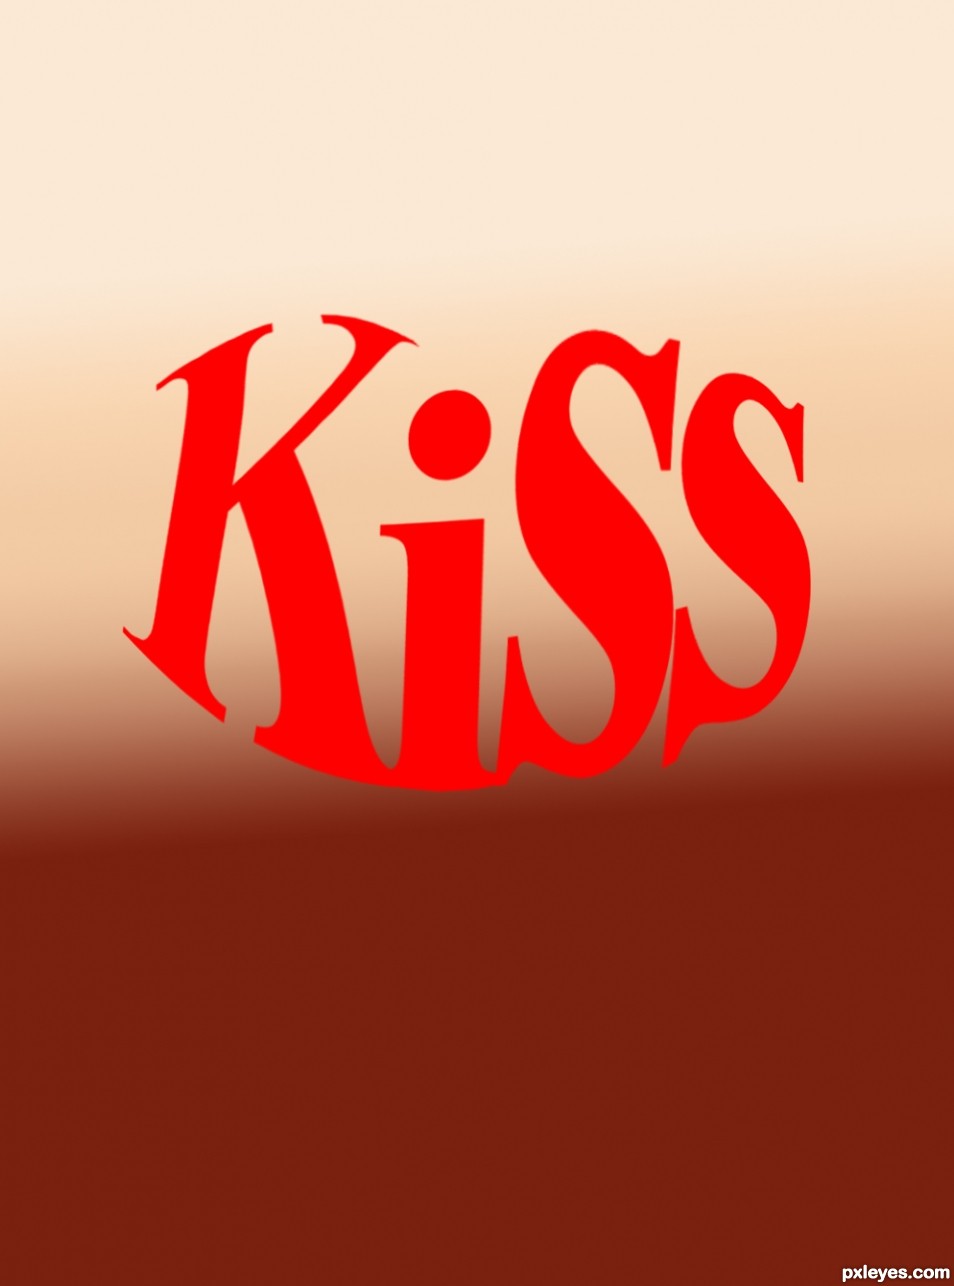 Creation of Kiss Kiss xoxo: Step 1